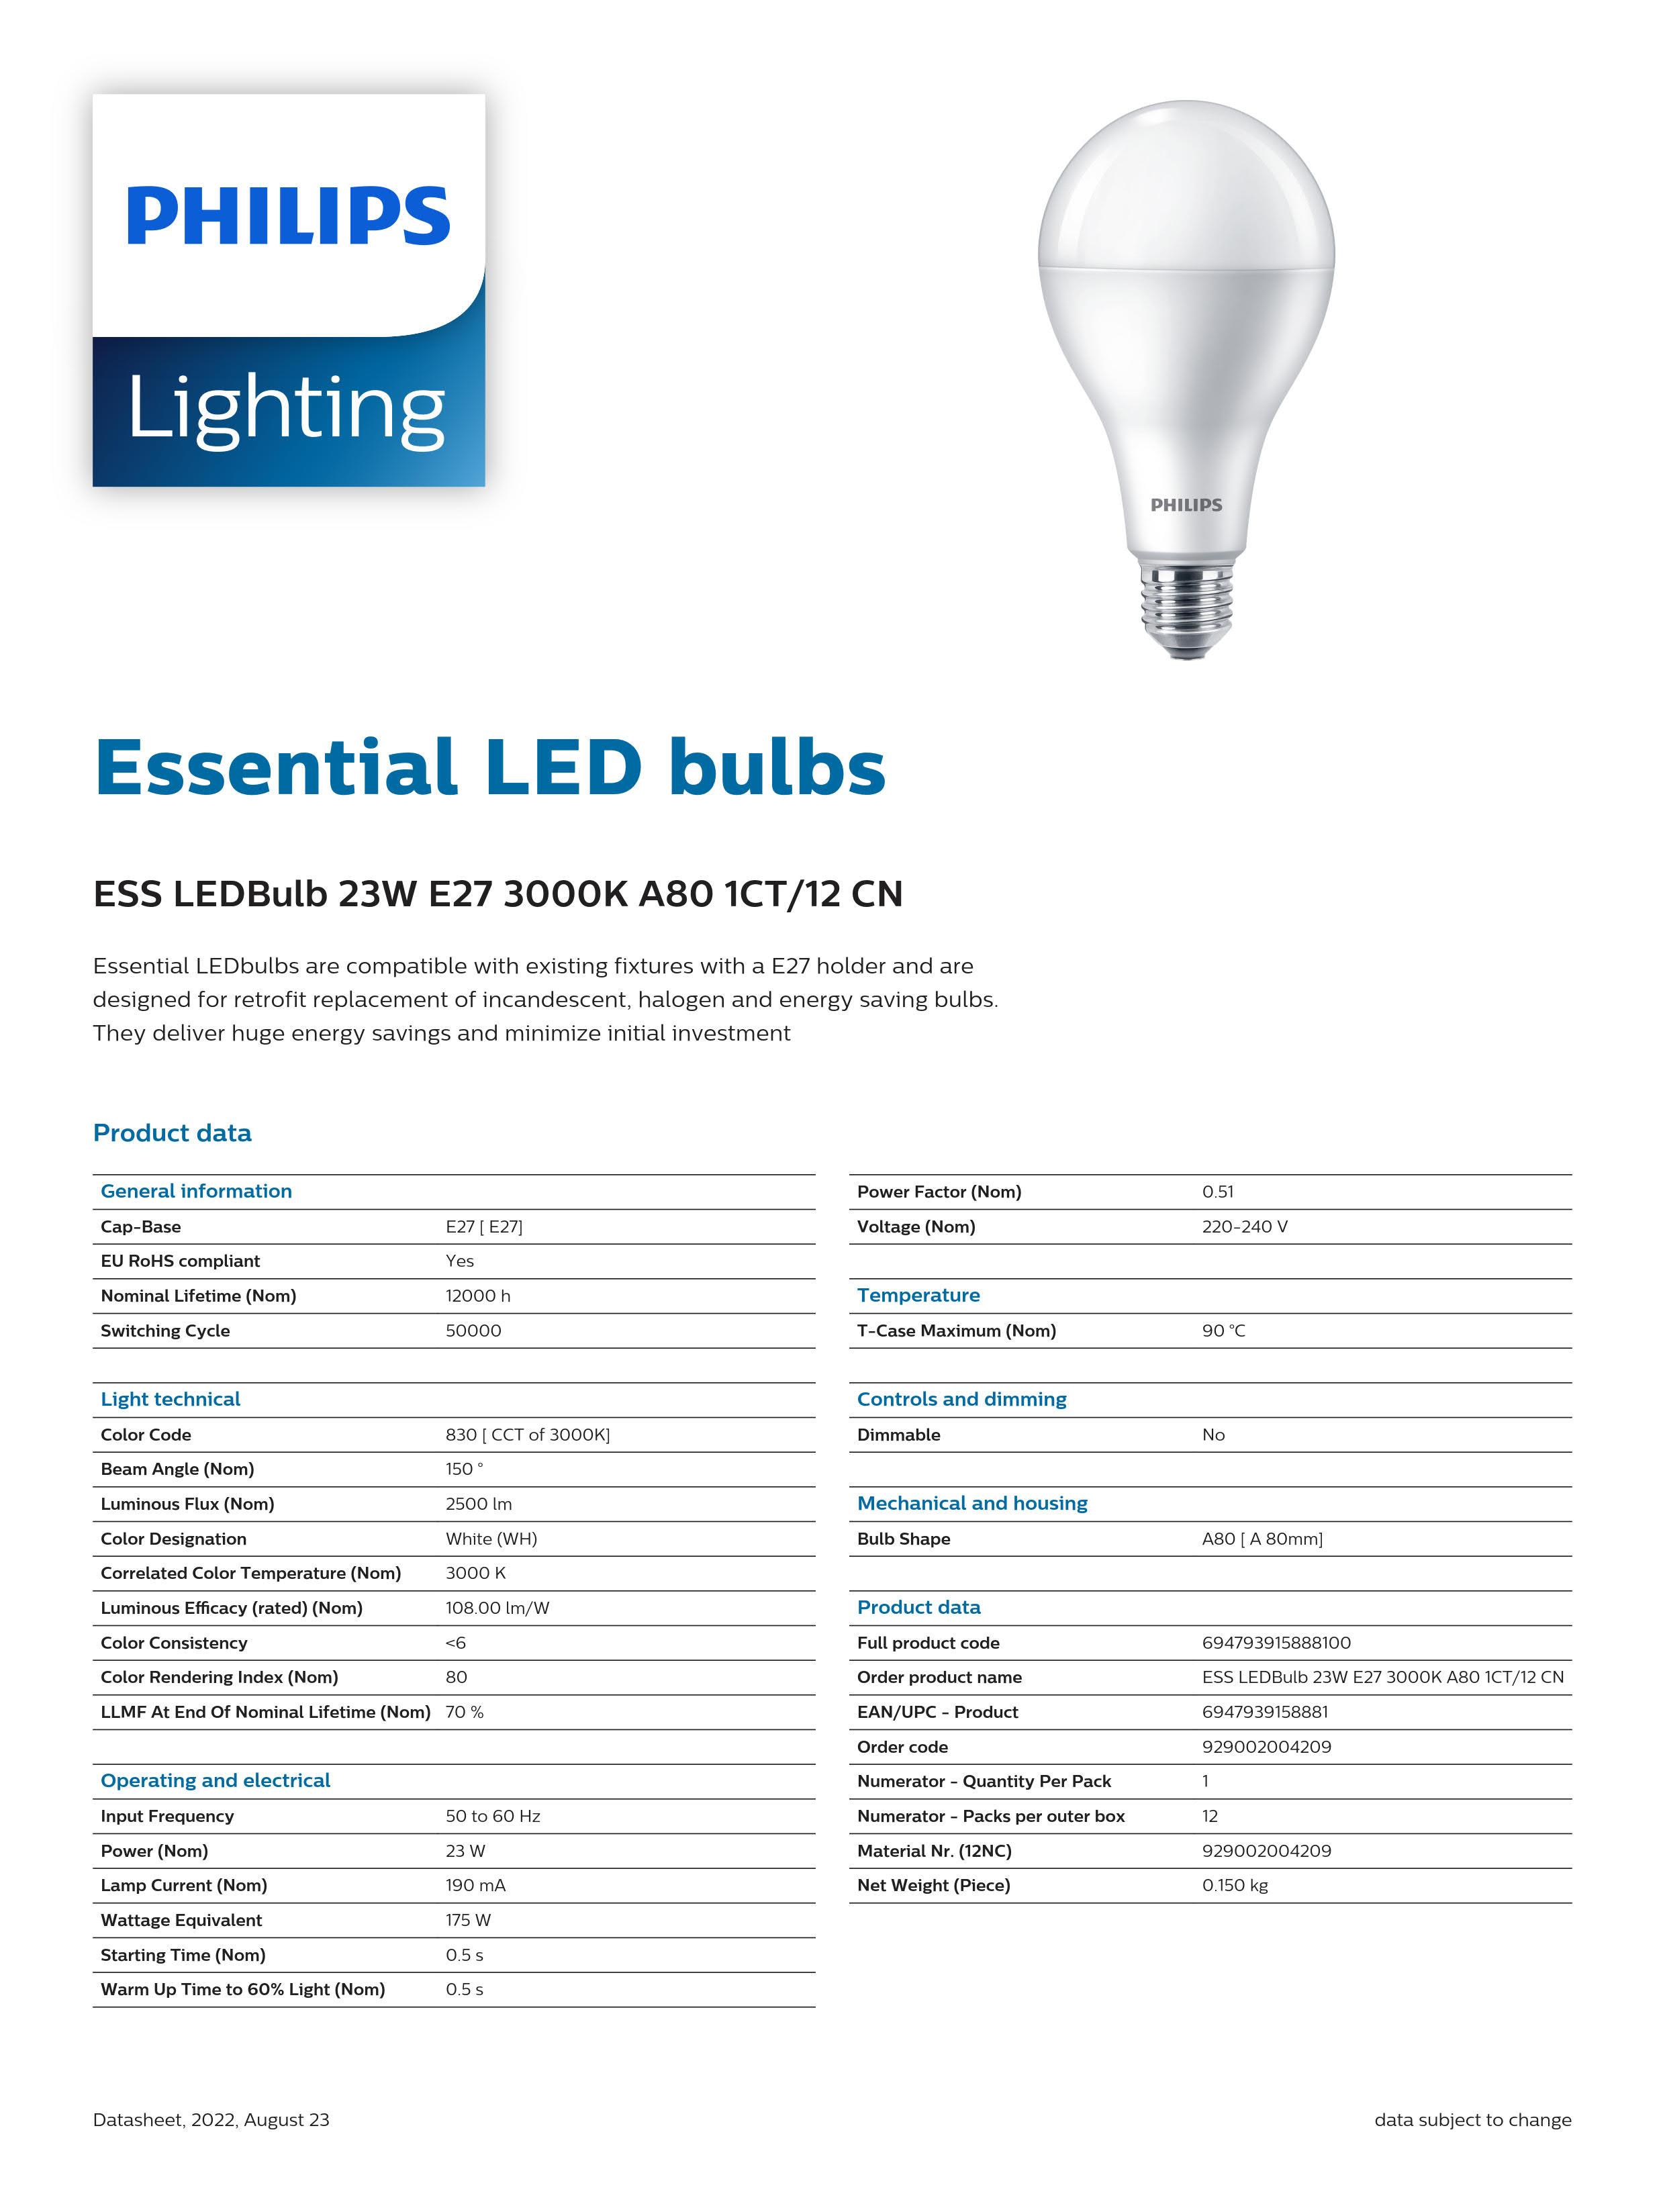 PHILIPS Essential LED bulbs 23W E27 3000K 230V 1CT/12 CN 929002004209